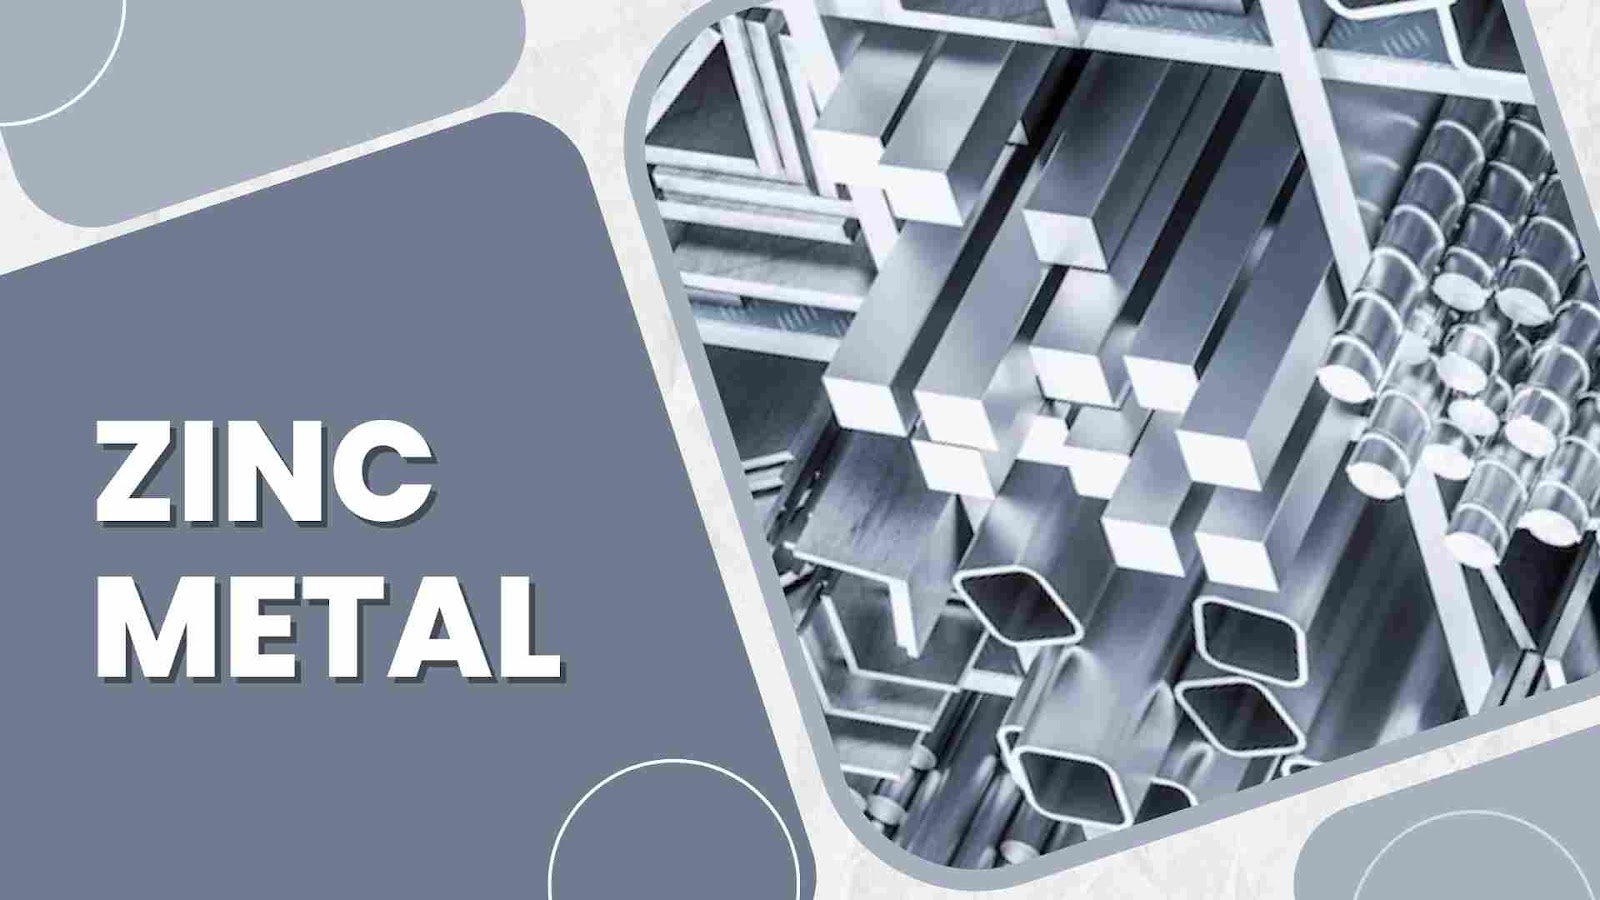 Uses of Zinc Metal: